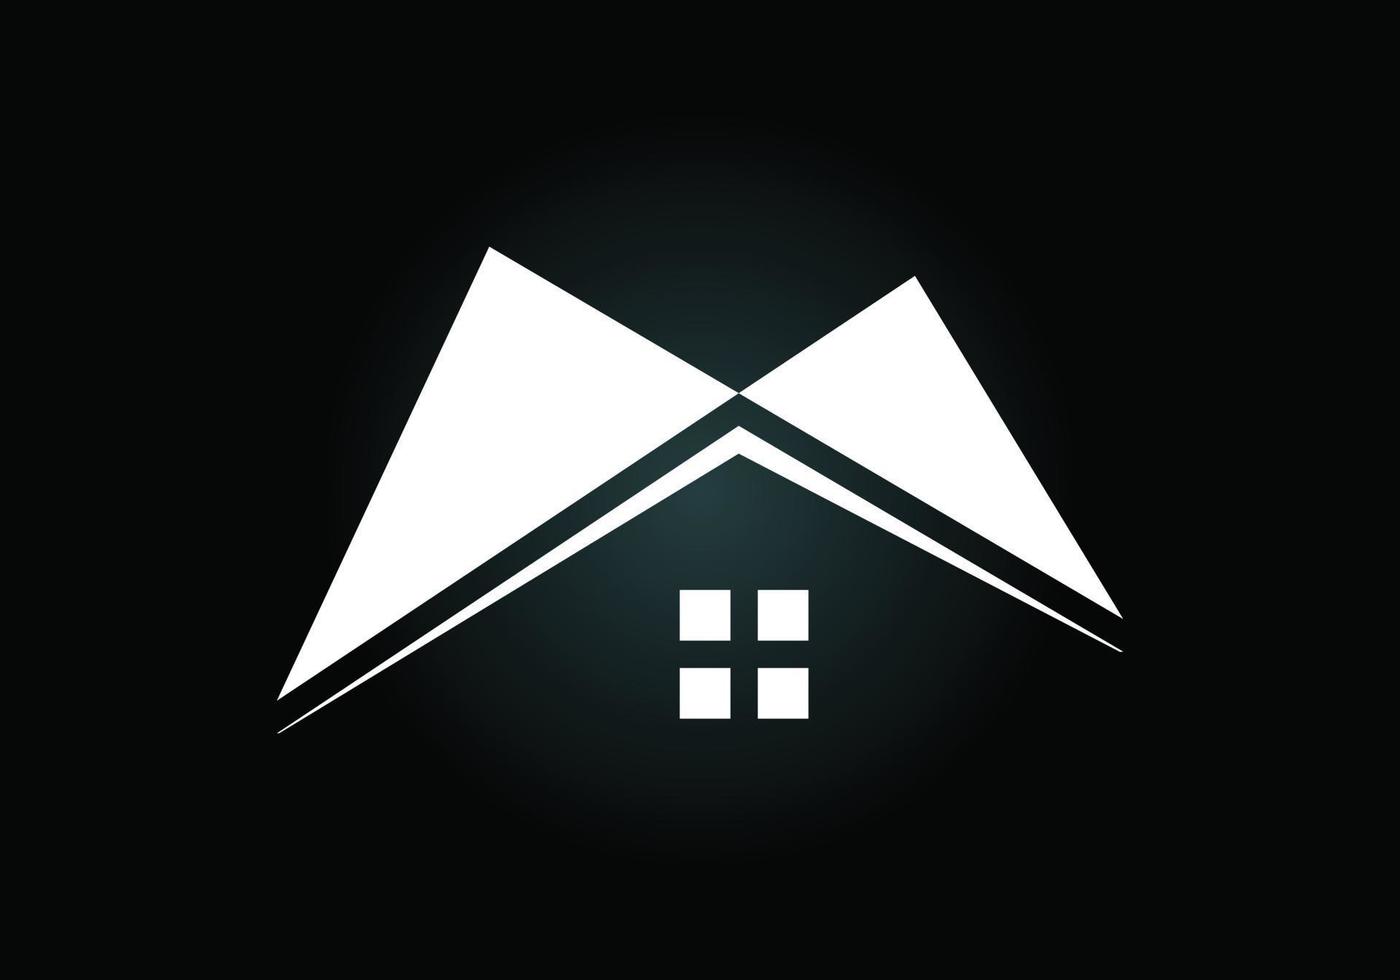 fastighets logotyp, hus logotyp, hem logotyp tecken symbol vektor